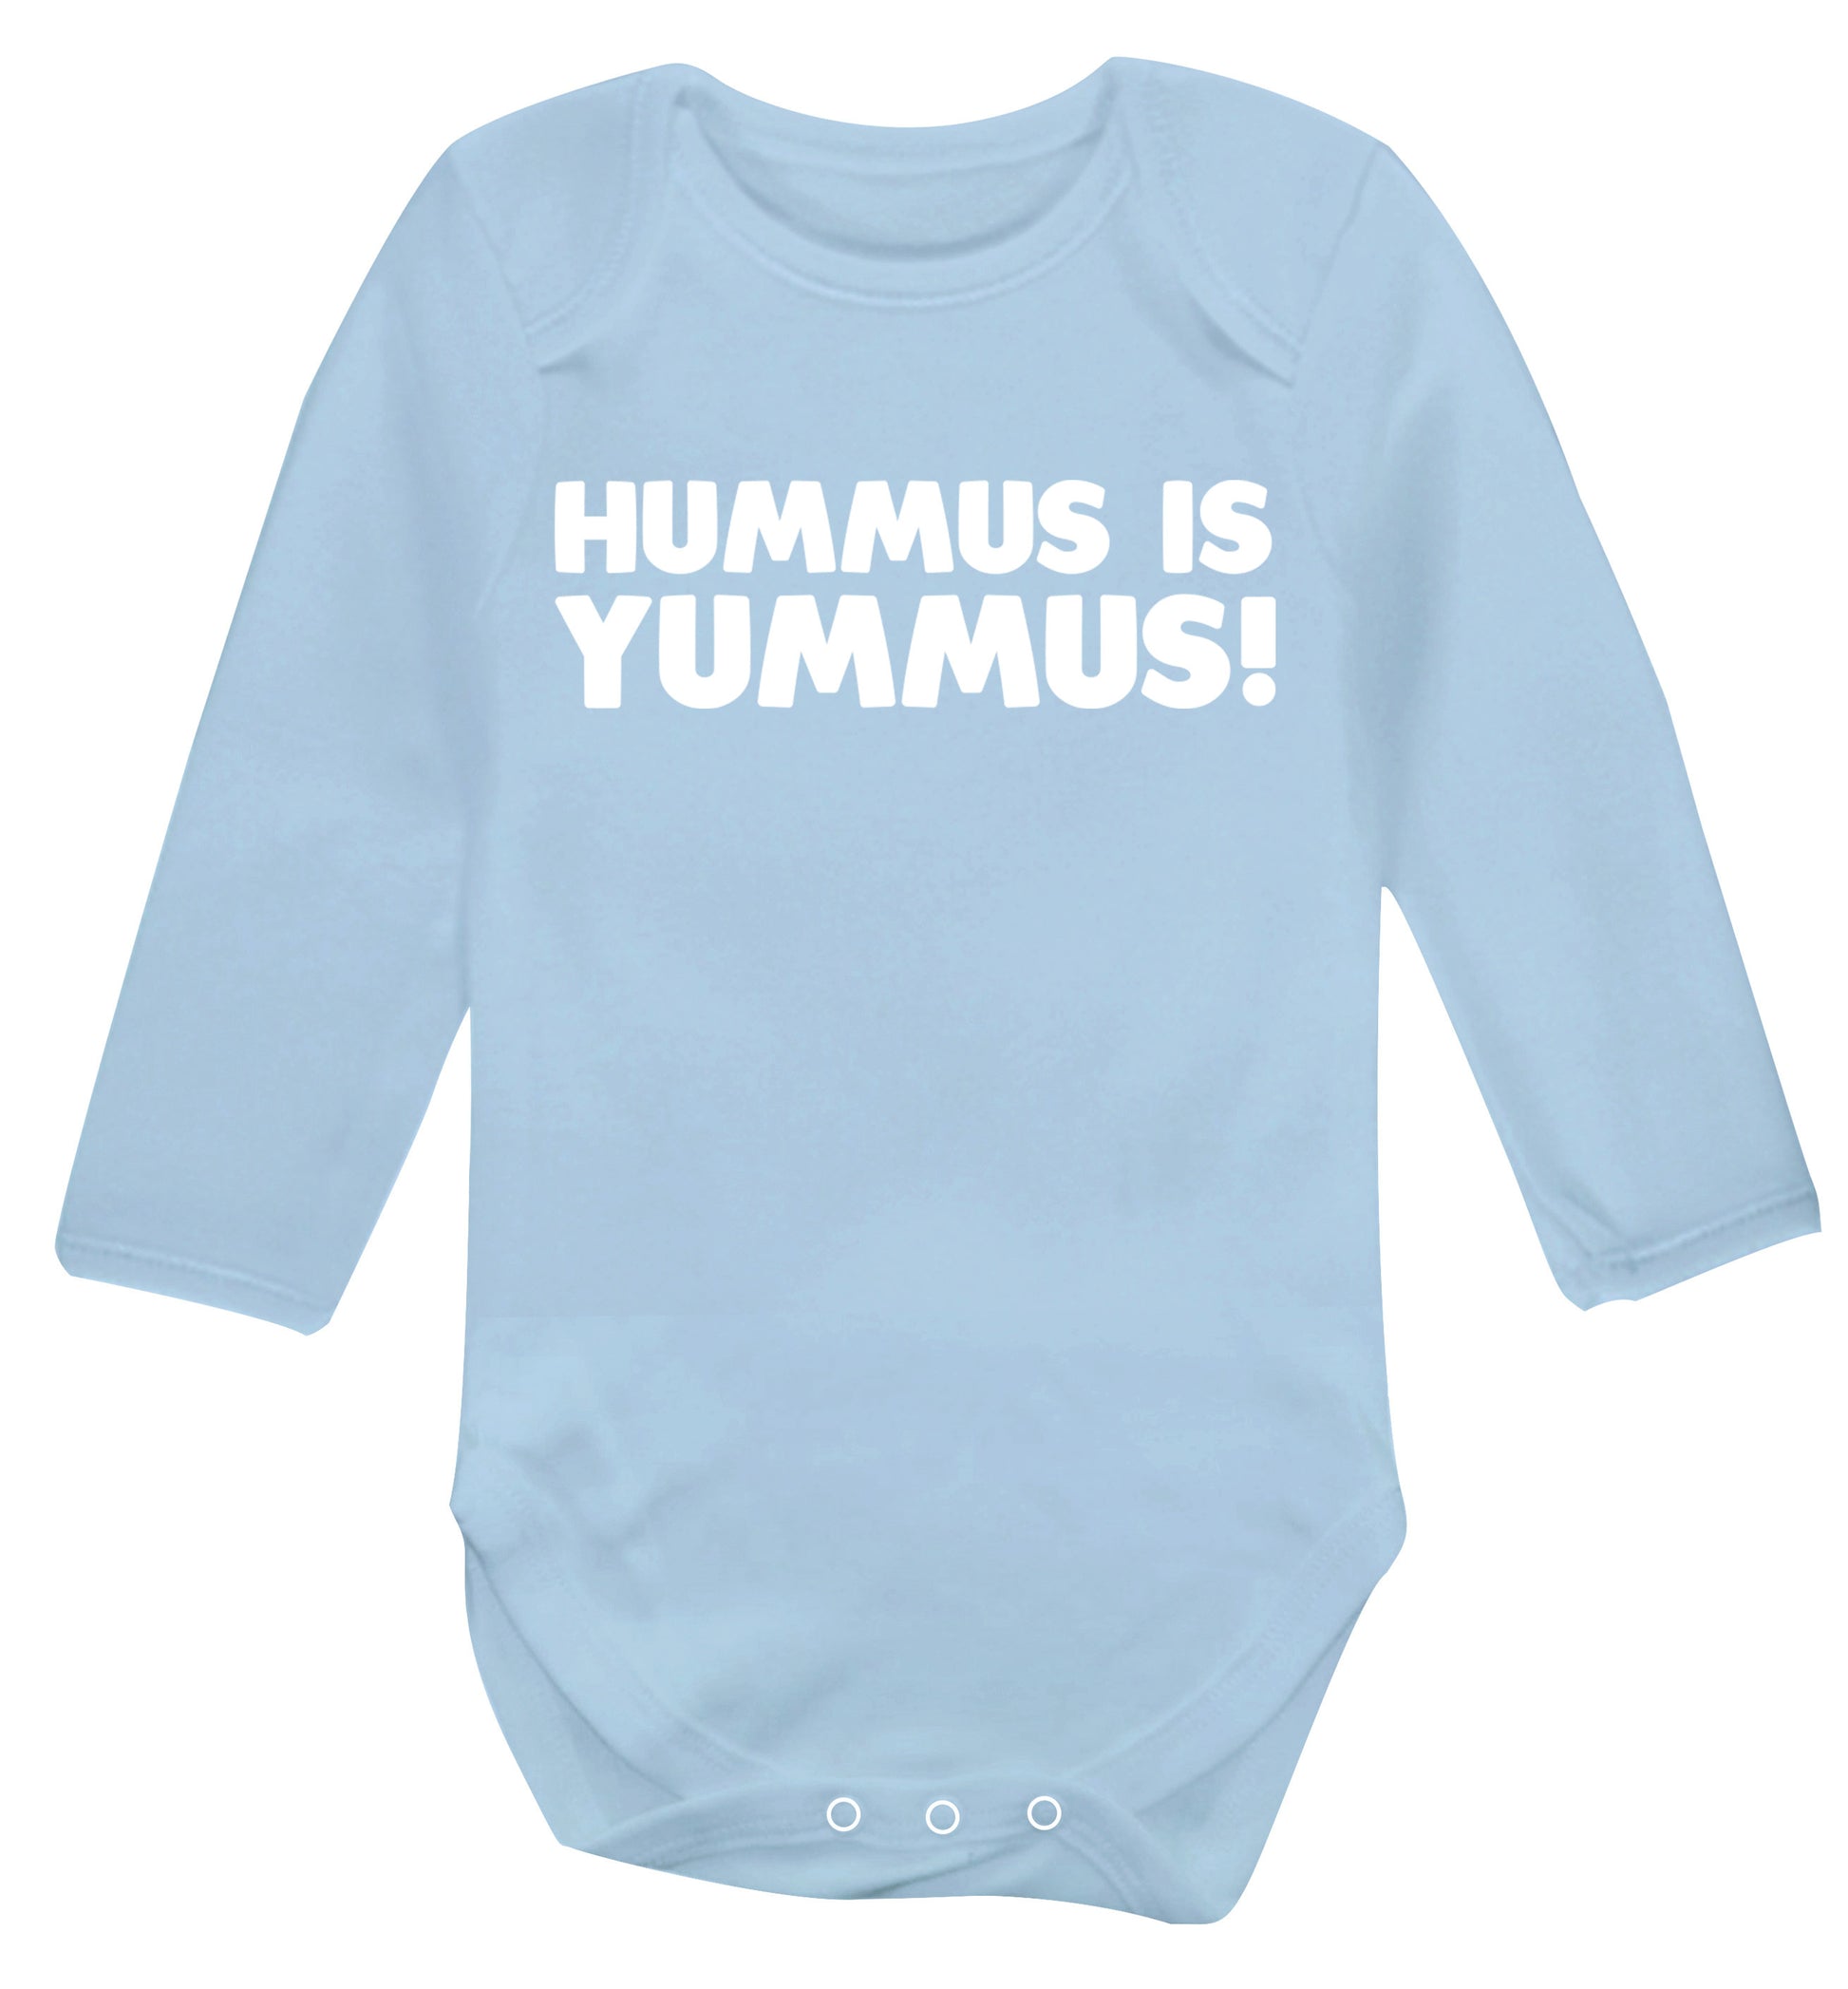 Hummus is Yummus  Baby Vest long sleeved pale blue 6-12 months